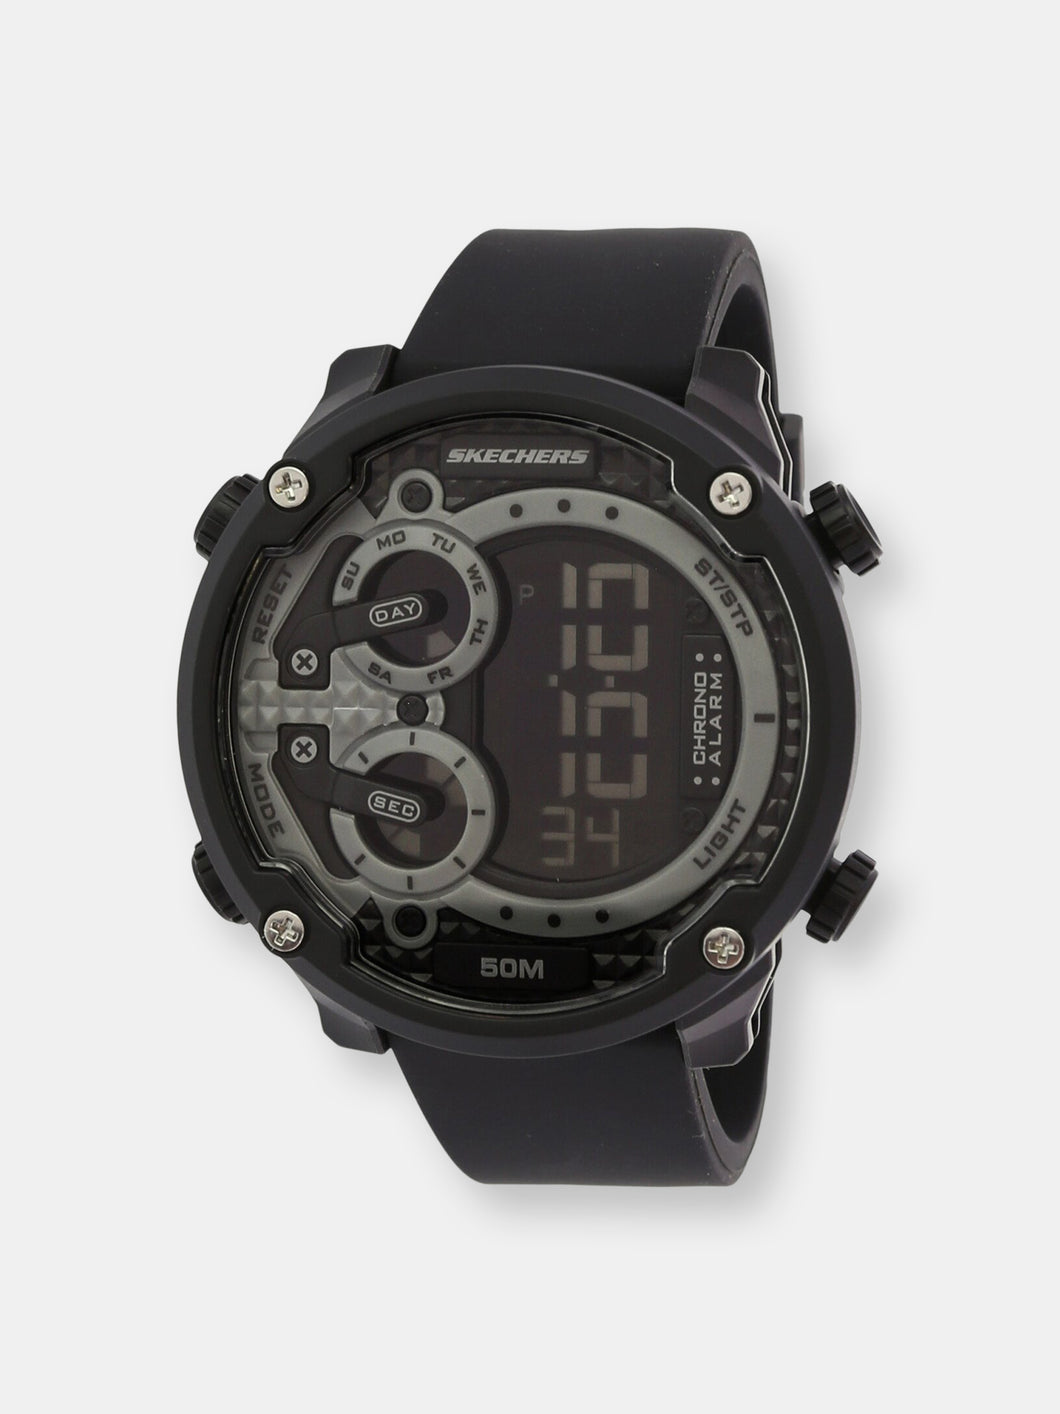 Skechers Watch SR5116 Ardmore, Digital Display, Water Resistant, Chronograph, Alarm, Date Function, Backlight, Black